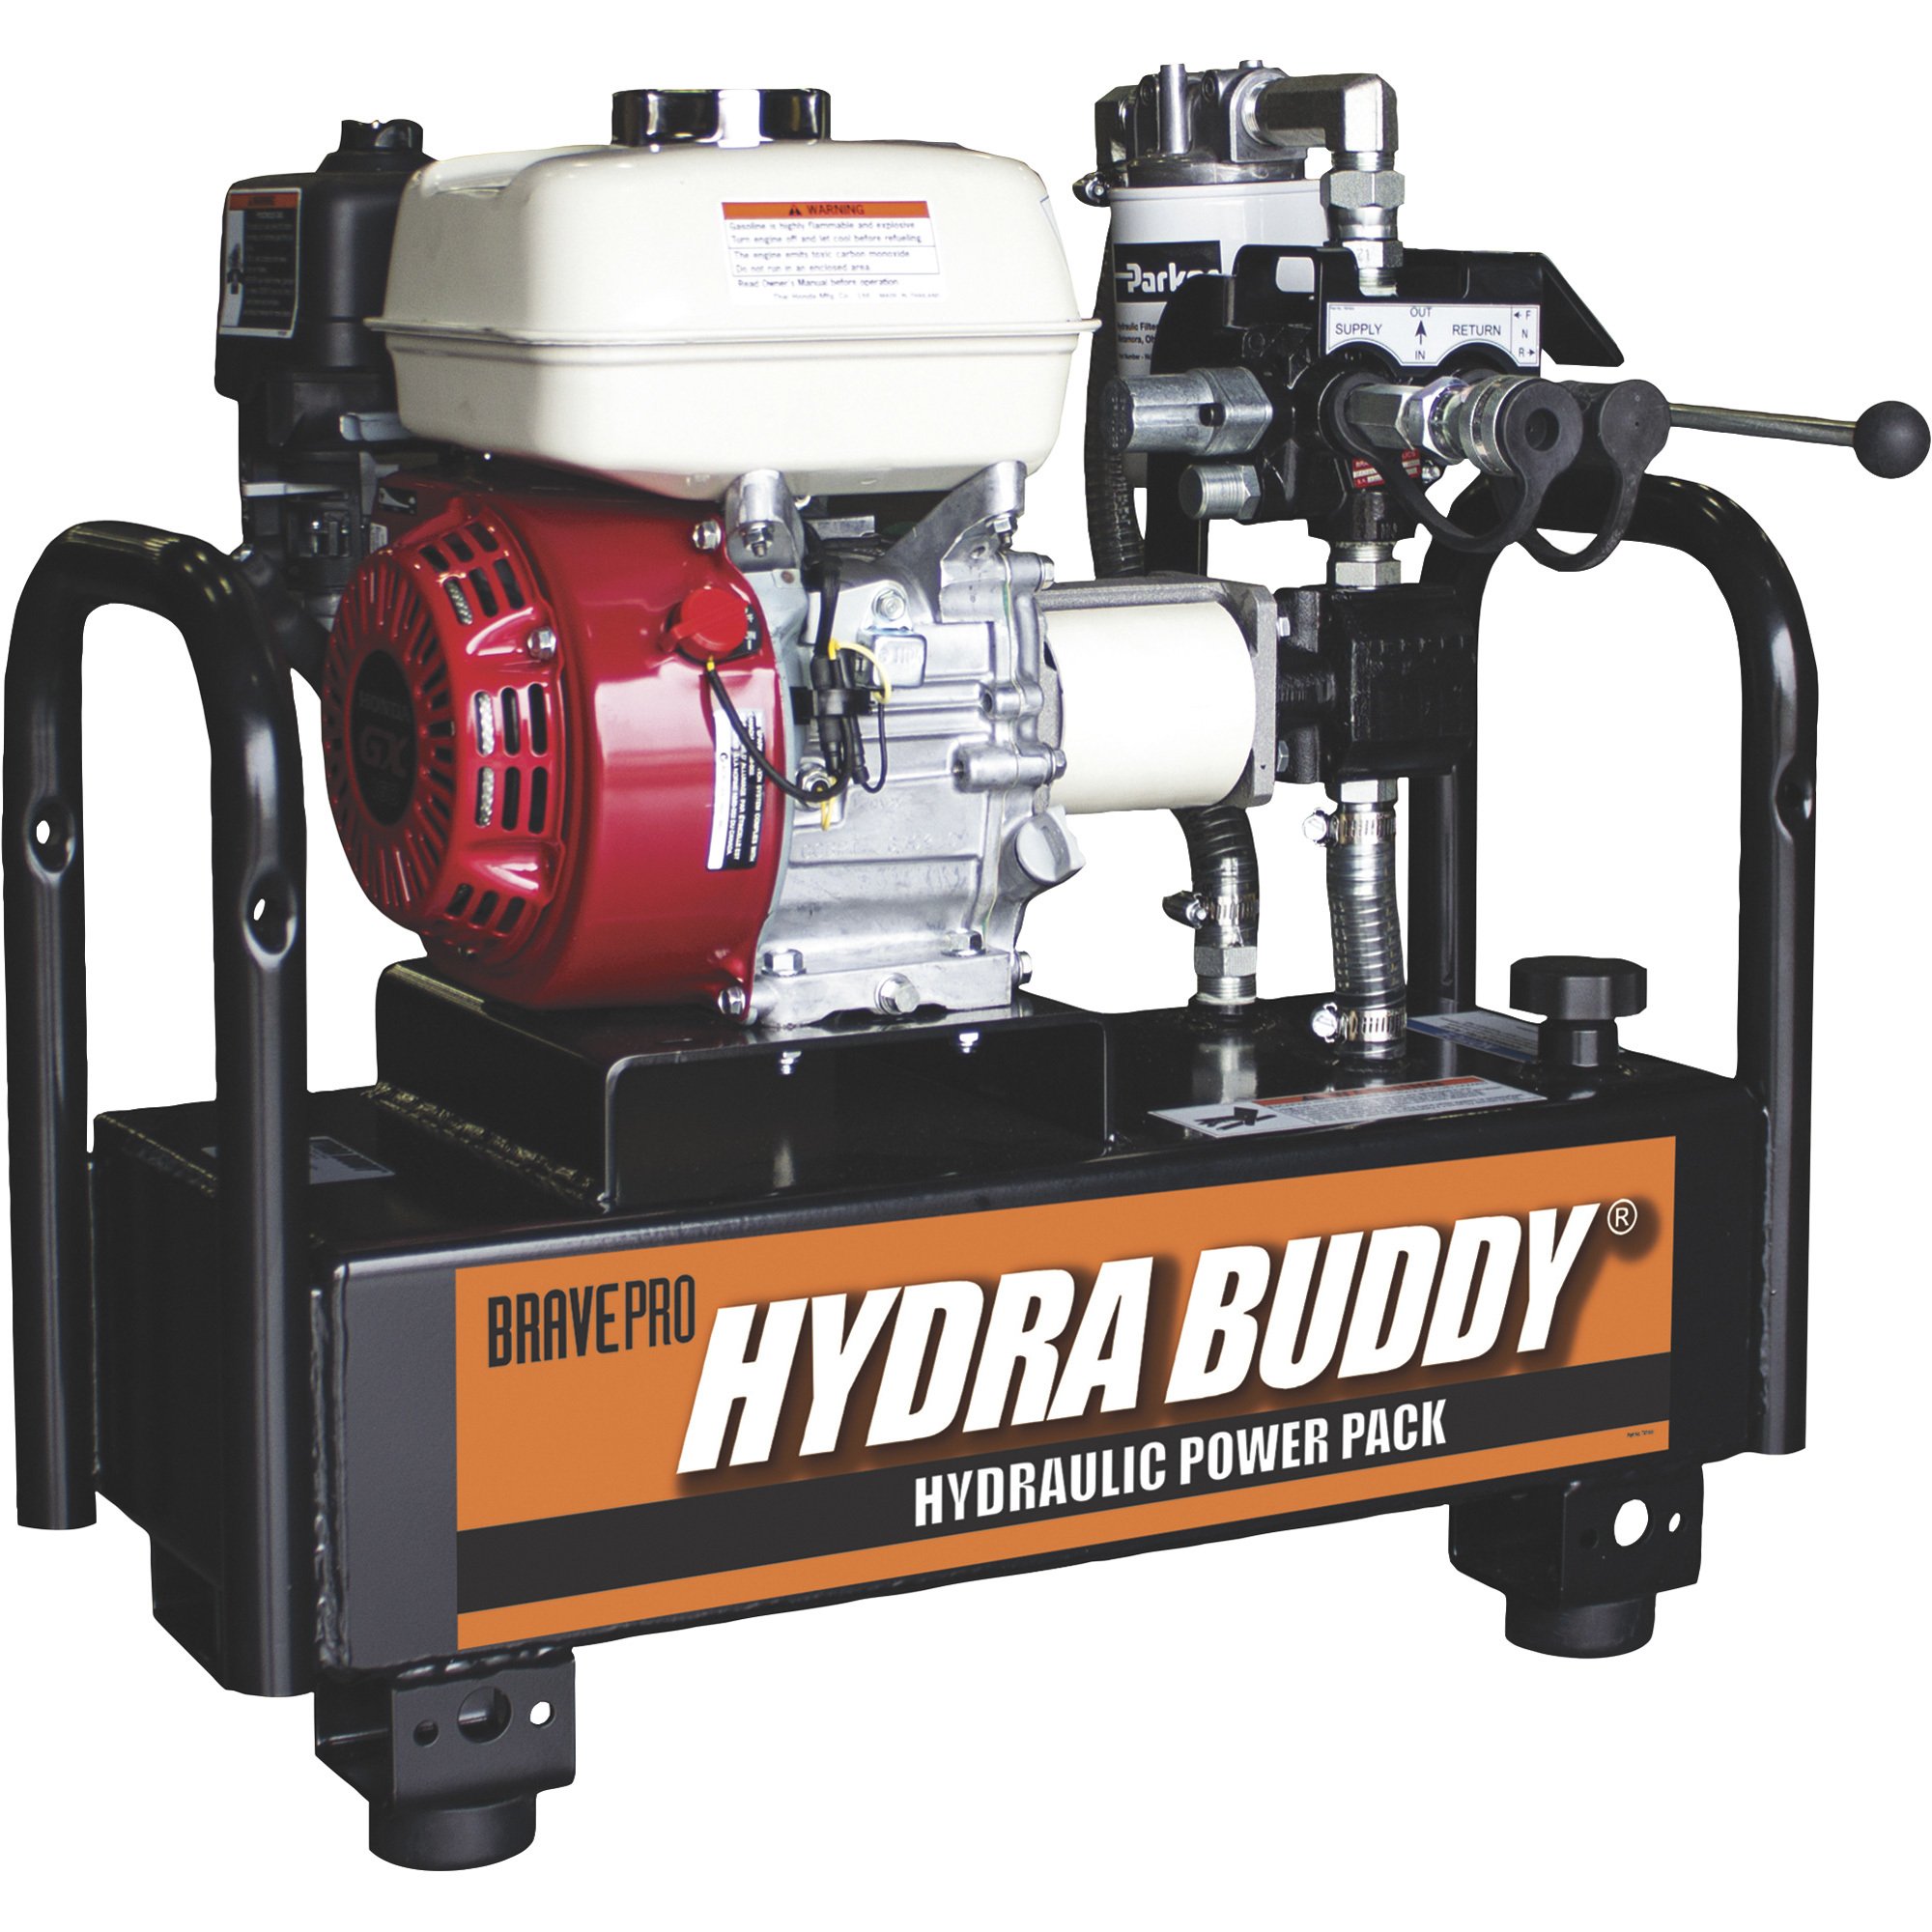 BravePro Hydra-Buddy Hydraulic Power Pack - Model HBH16GX